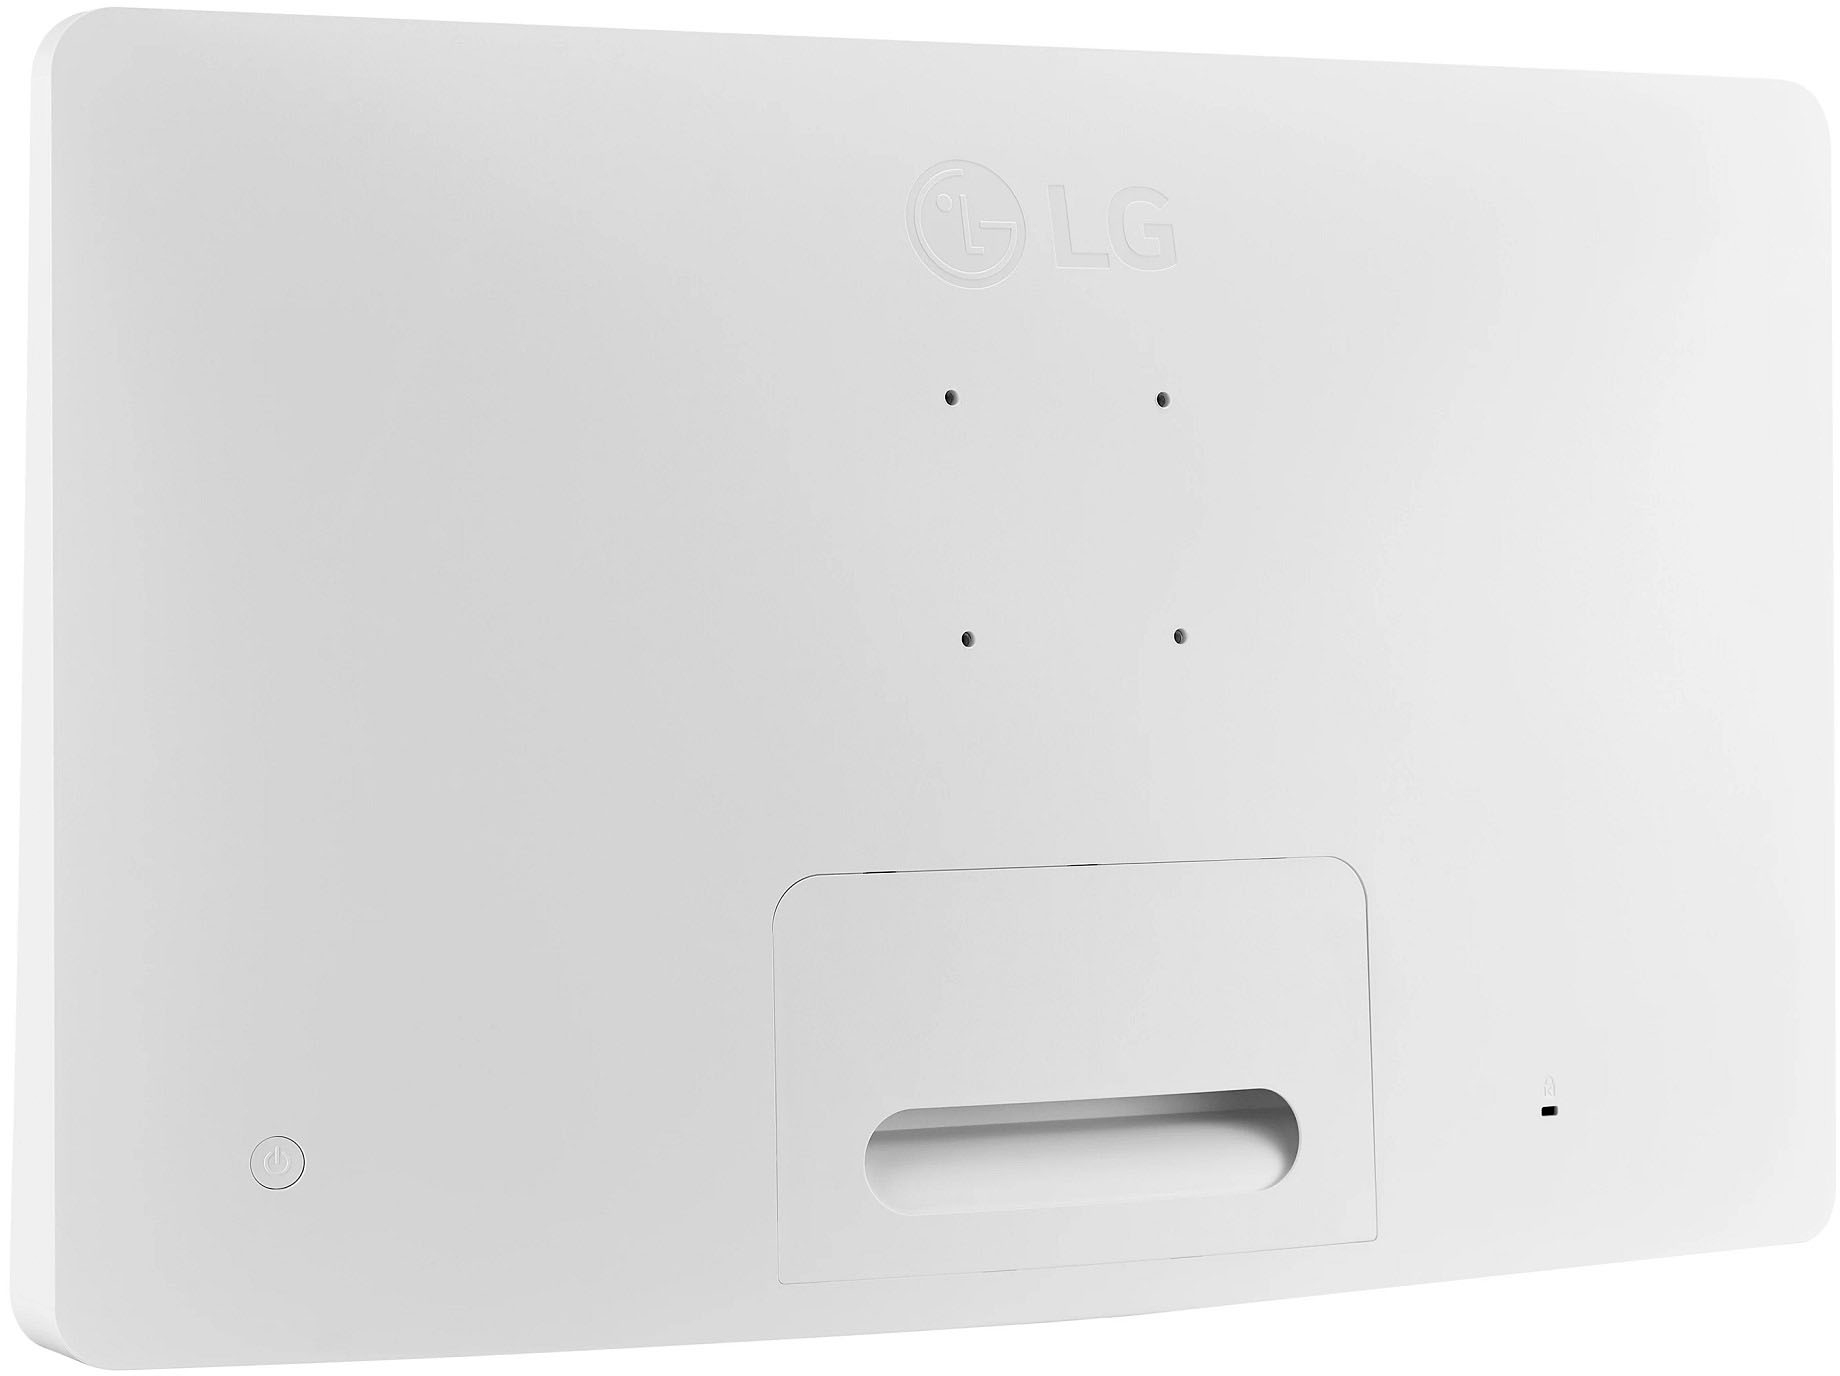 LG 27 Class LED Full HD TV 27LP600B-PU - Best Buy